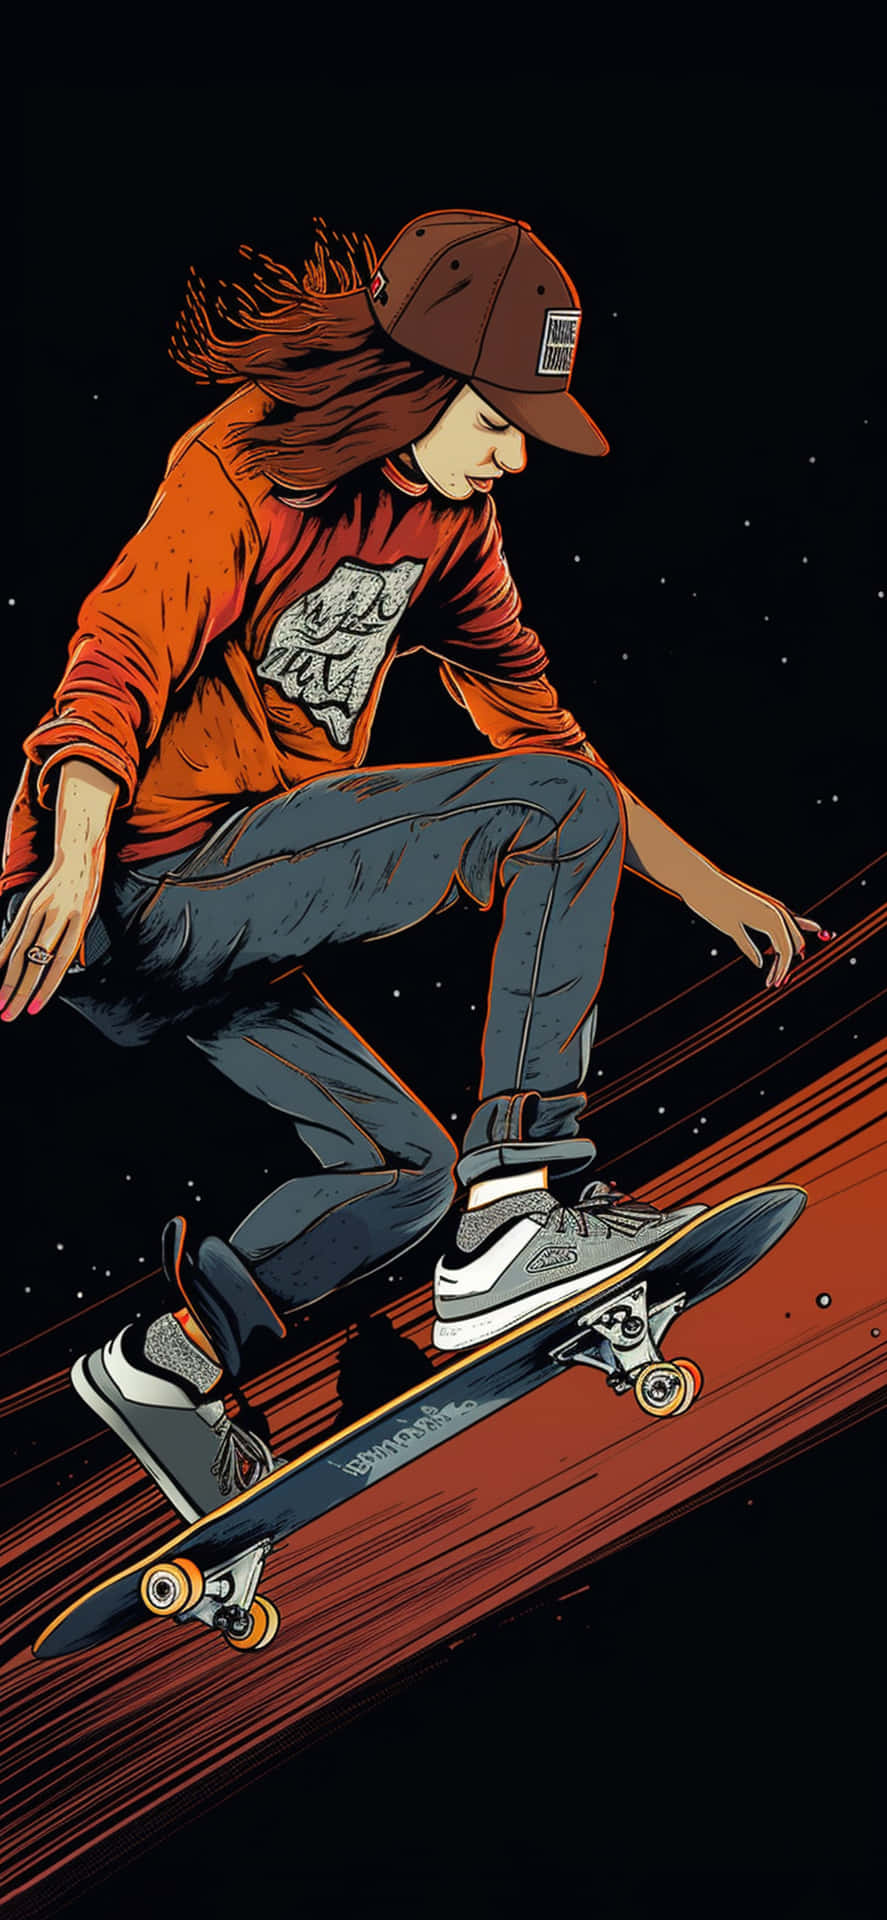 Nighttime Skateboarder Illustration Background